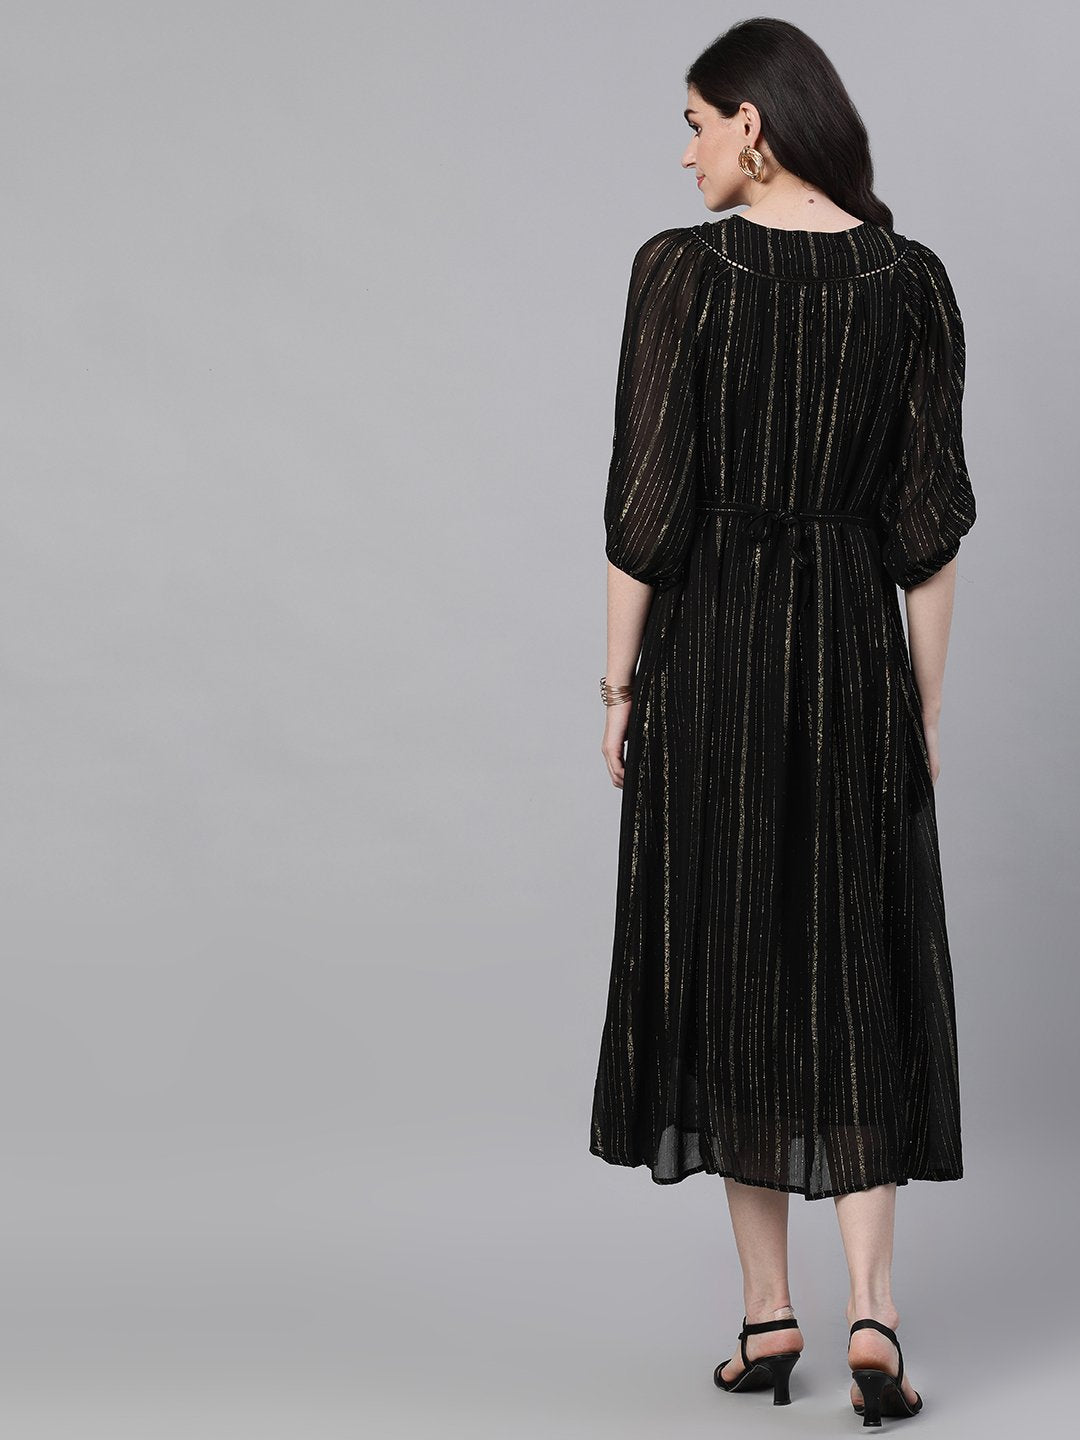 Ishin Women's Rayon Lurex Embroidered Jewel Neck A-Line Dress